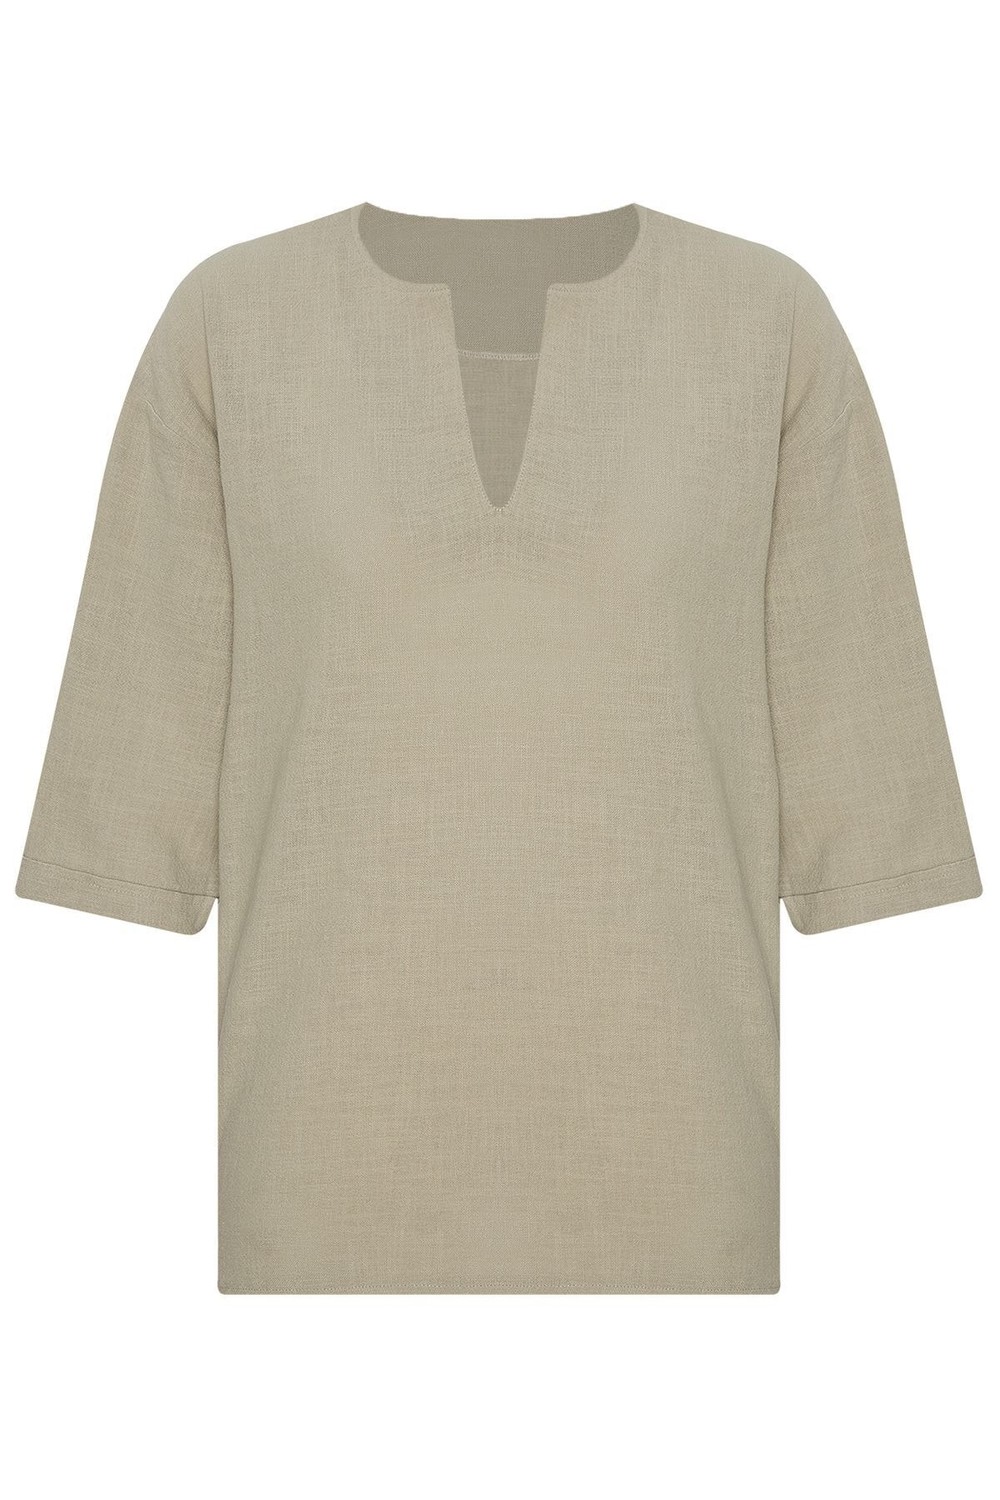 XHAN Mint V-Neck Poor Sleeves Oversized Linen Shirt 2x2x2-45964-58